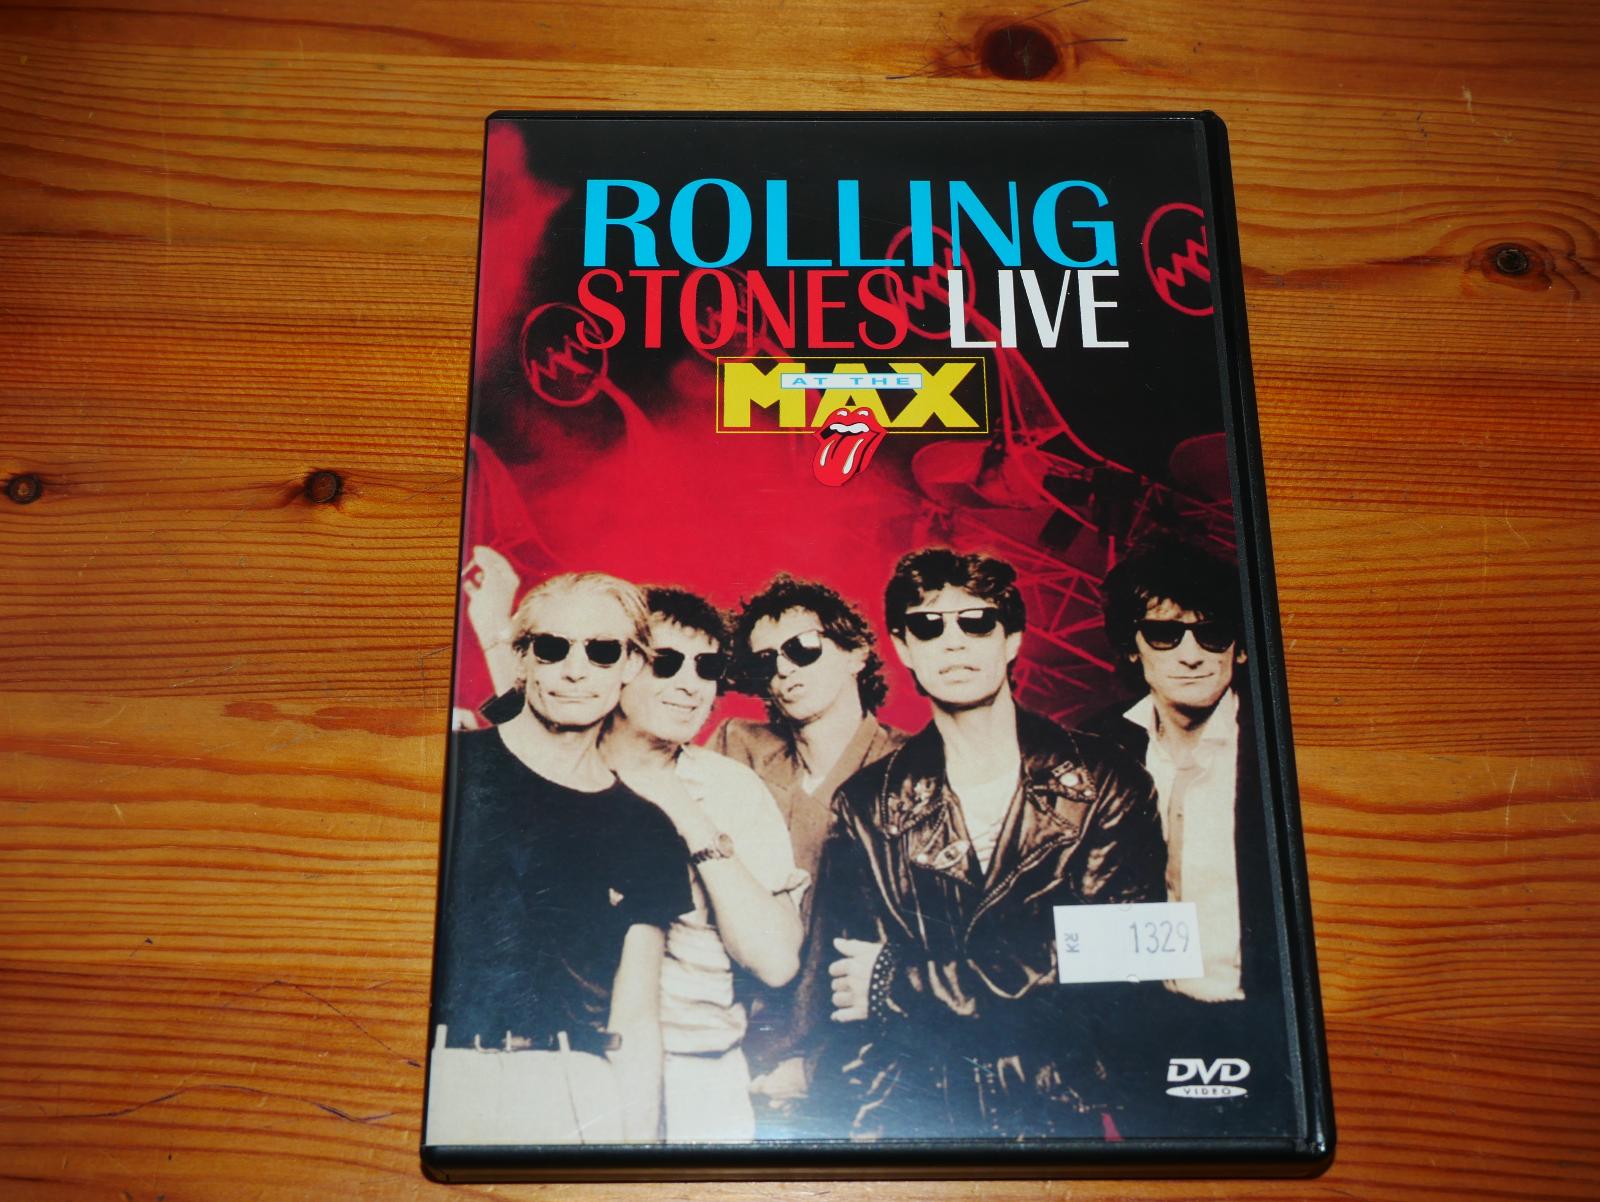 ROLLING STONES LIVE AT MAX - DVD KONCERT - Film